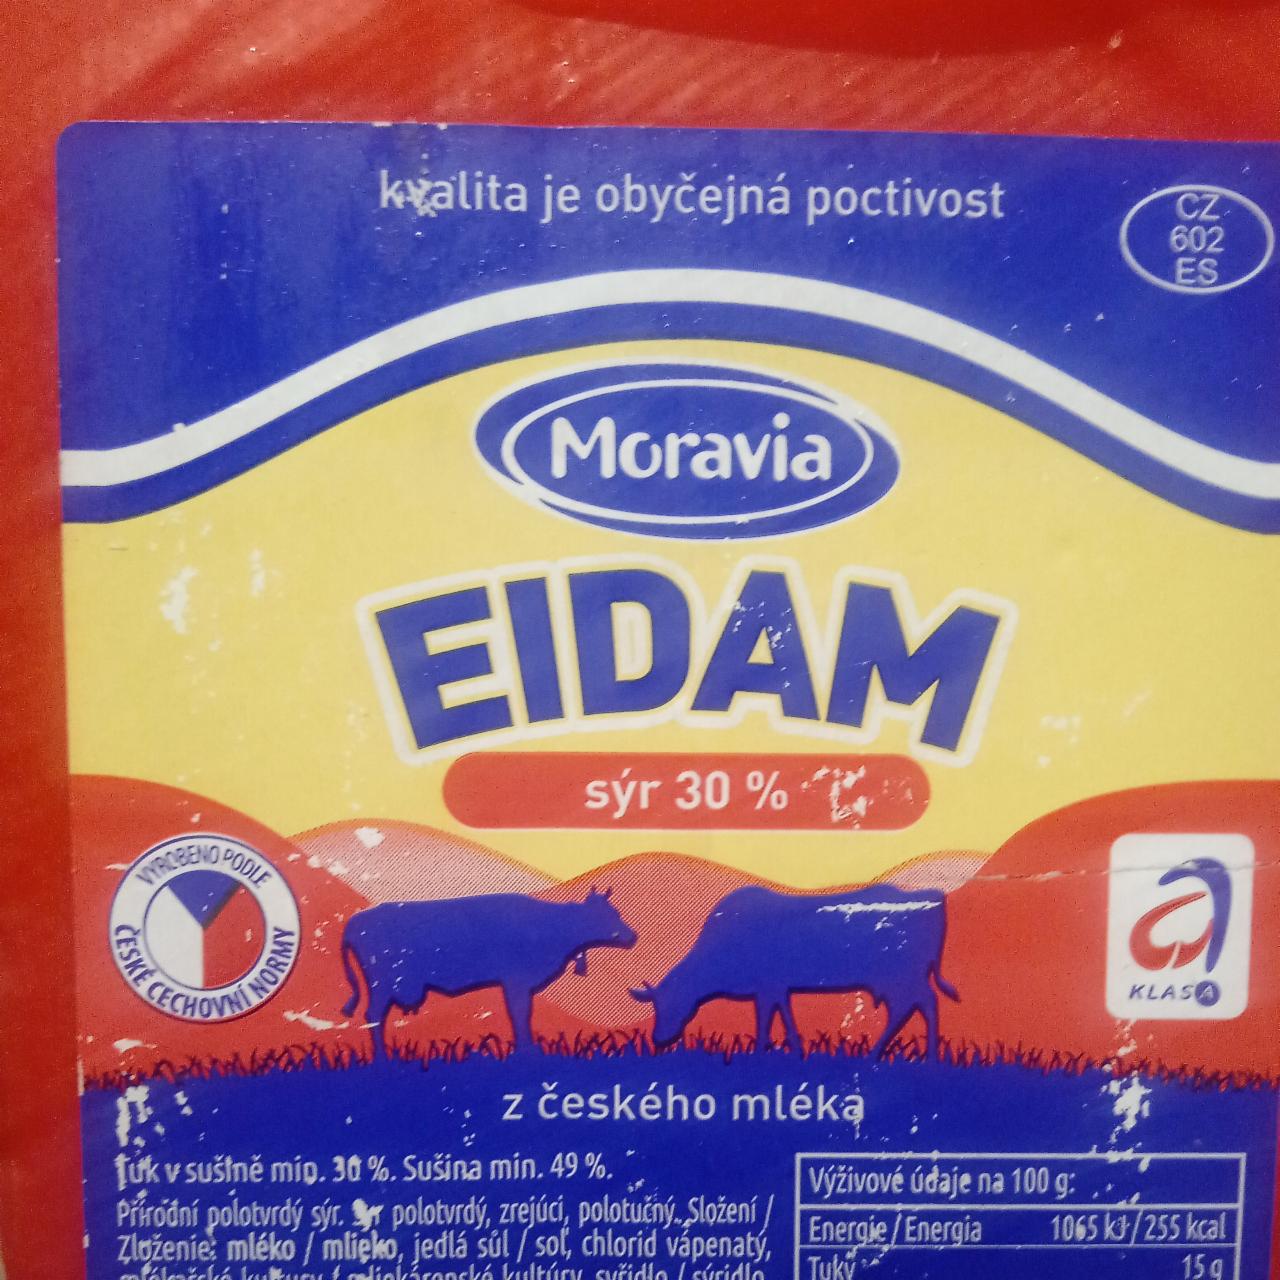 Фото - сир эдам 30% Moravia